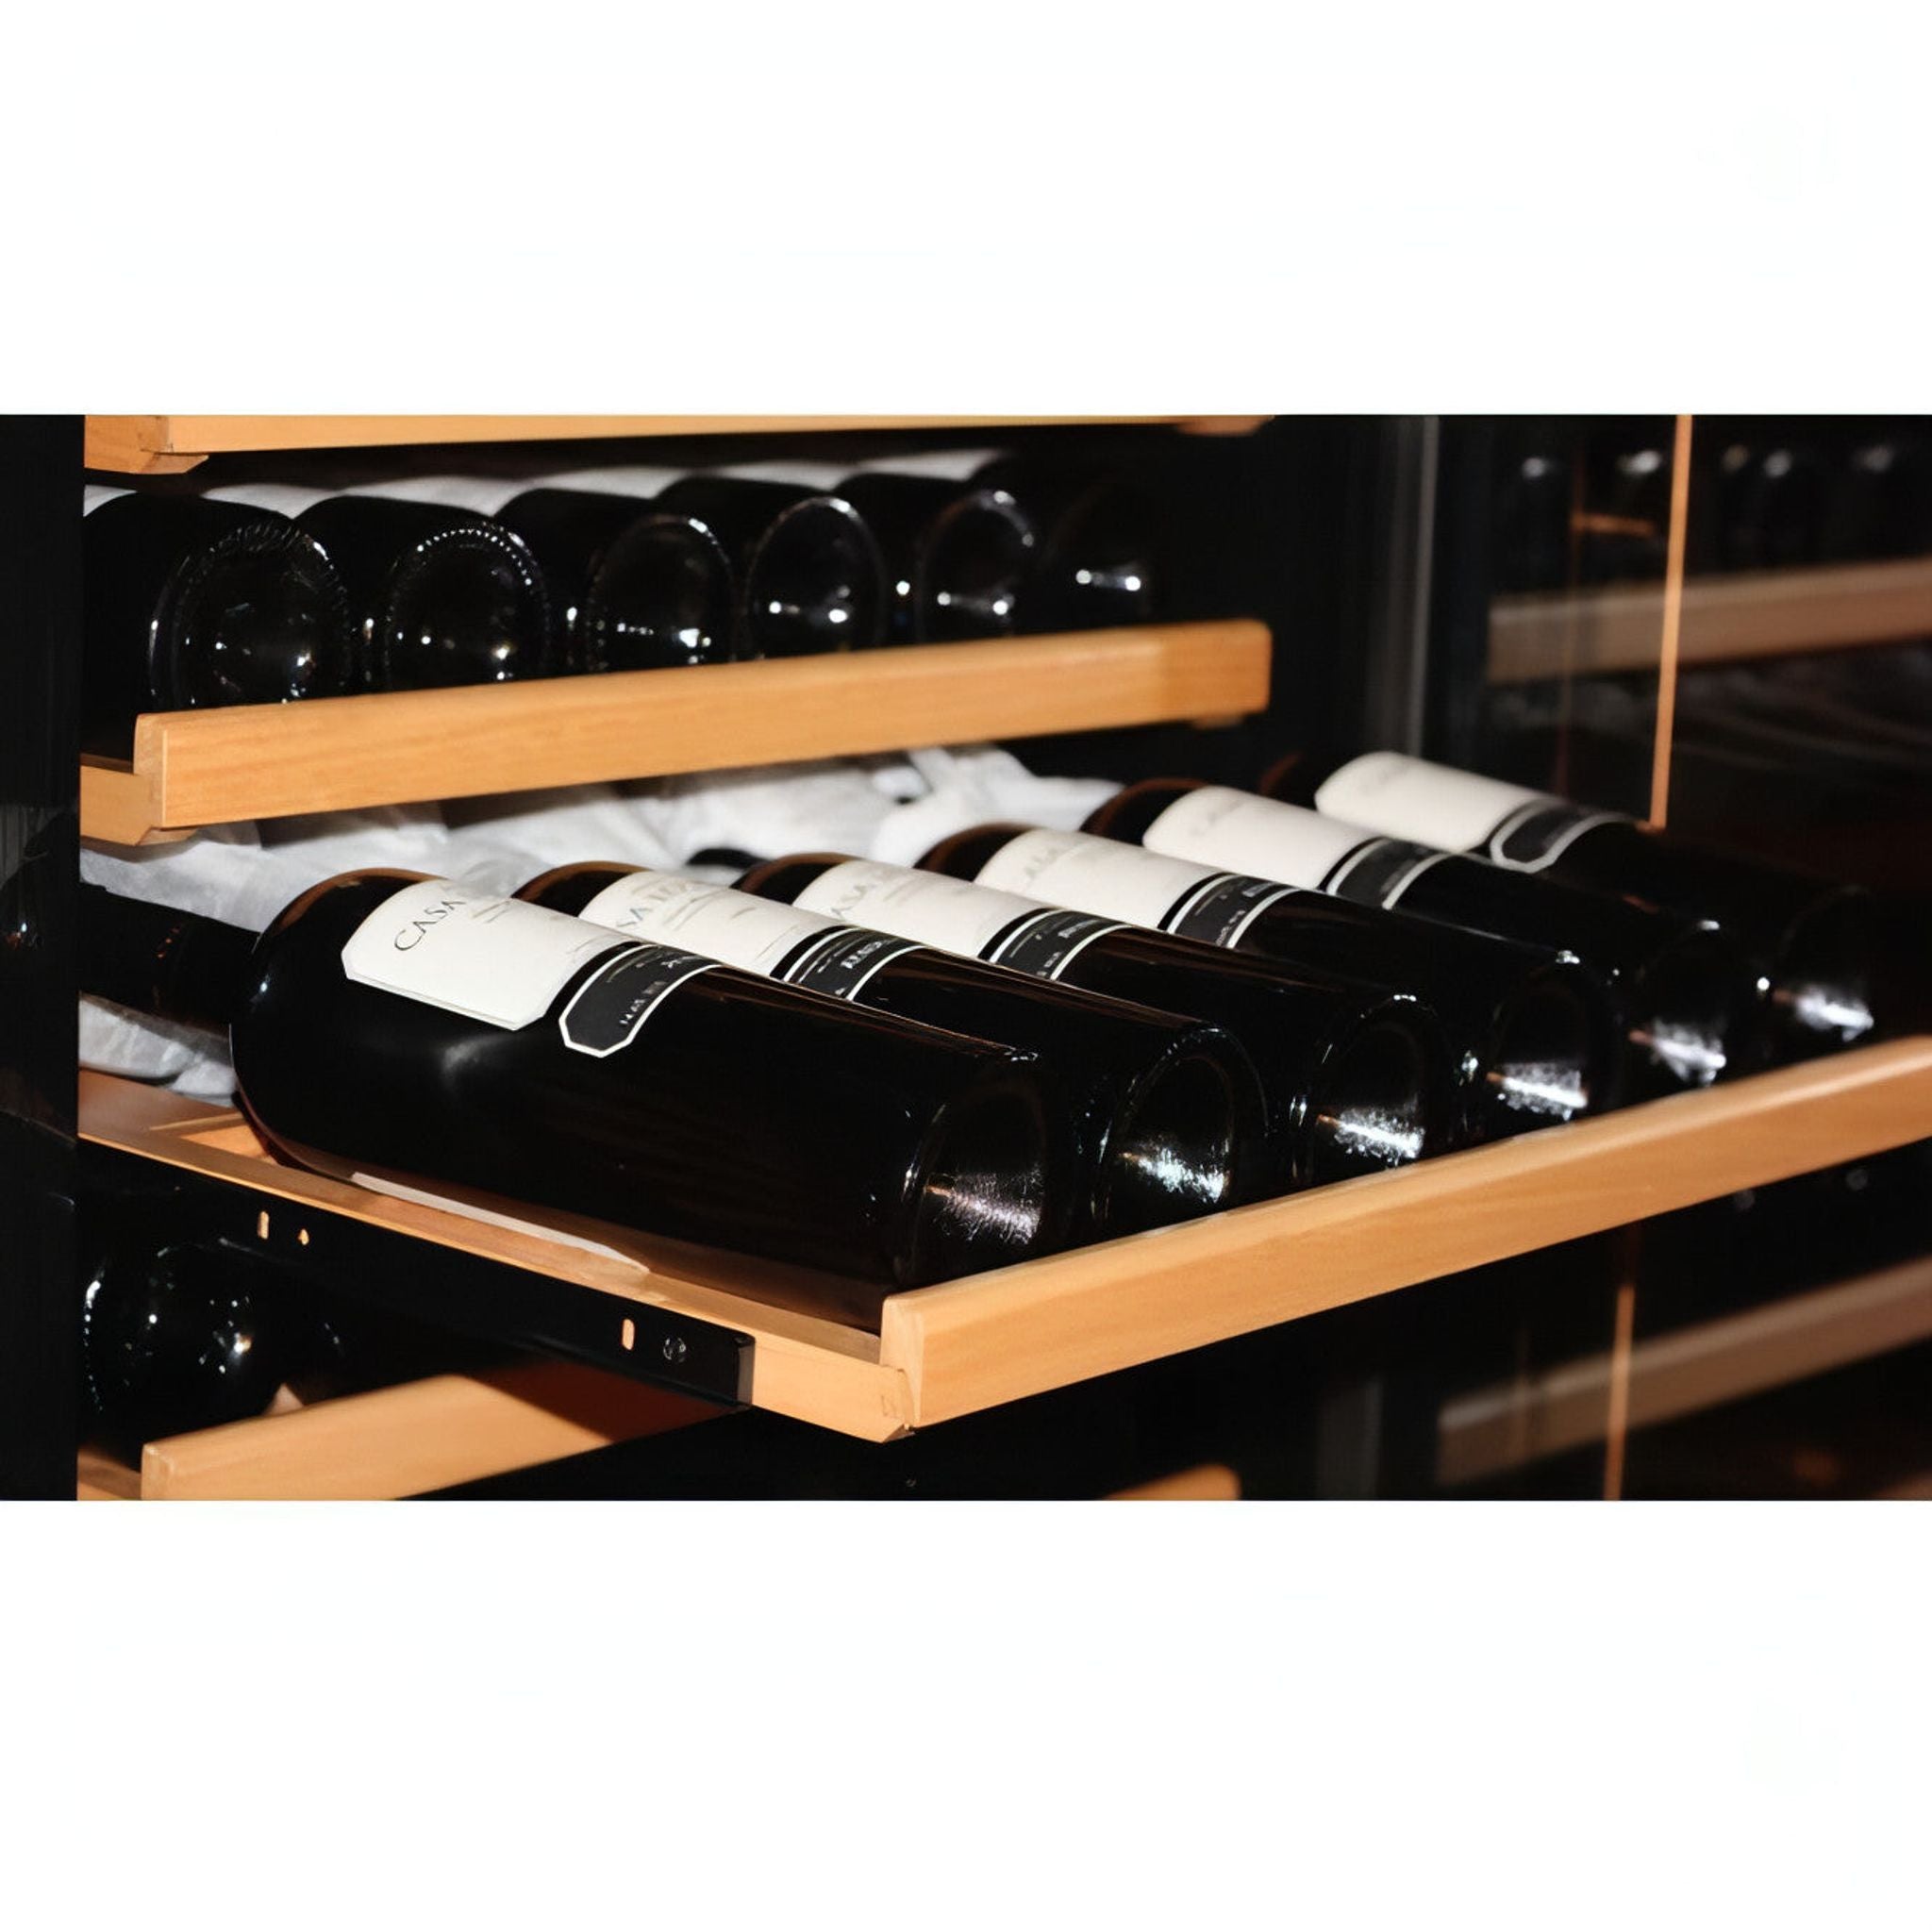 SWISSCAVE - 178 Bottle Single Temperature Zone Wine Cooler - WL450F